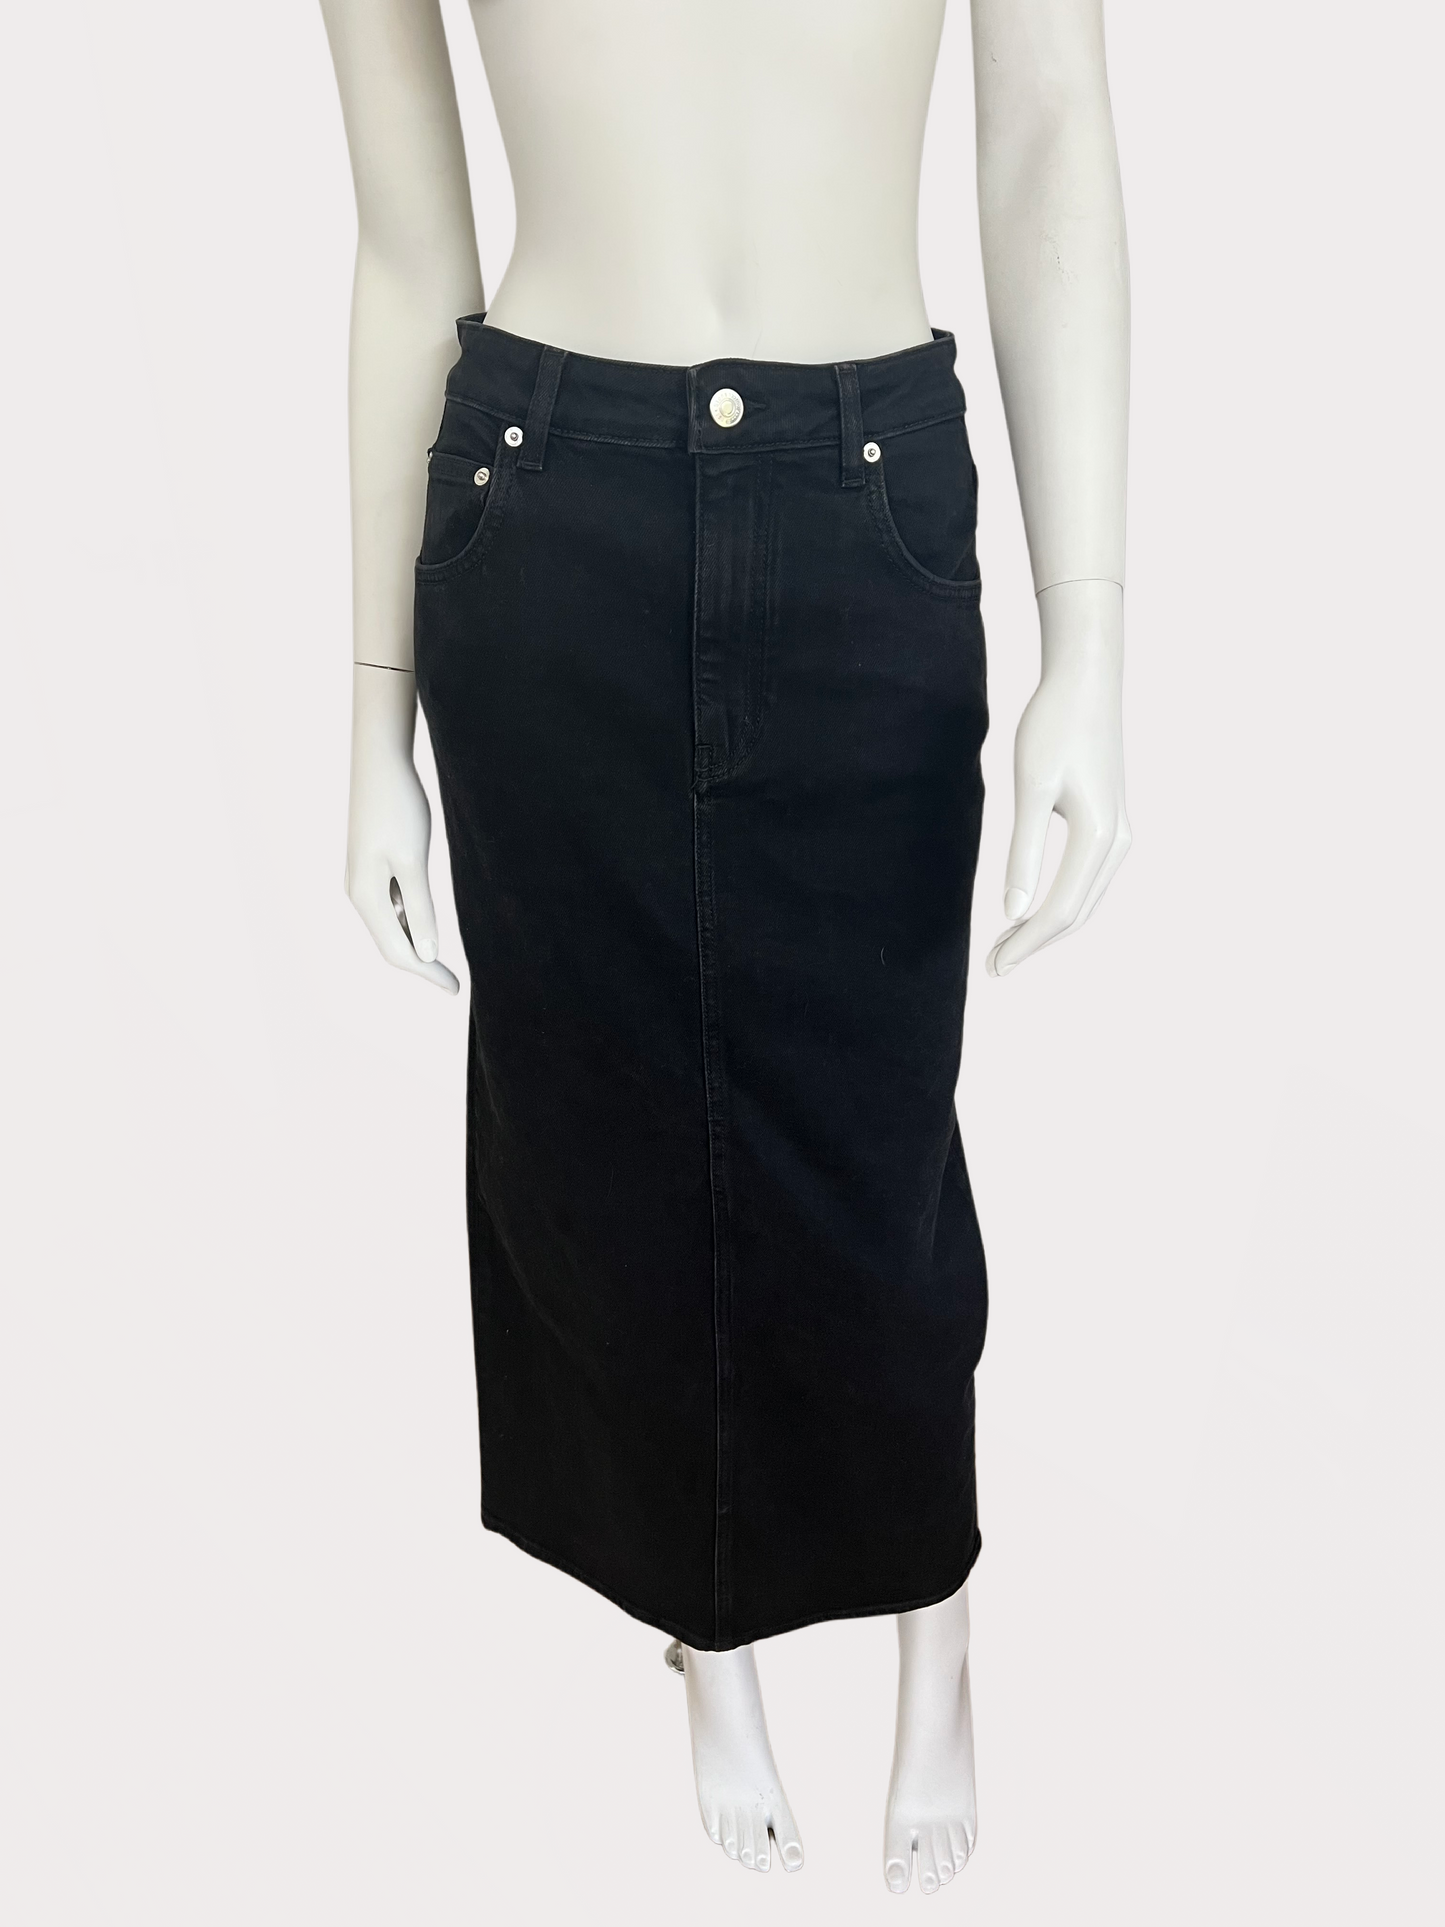 Maje Paris - Long Black Denim Skirt - New w/ Tags